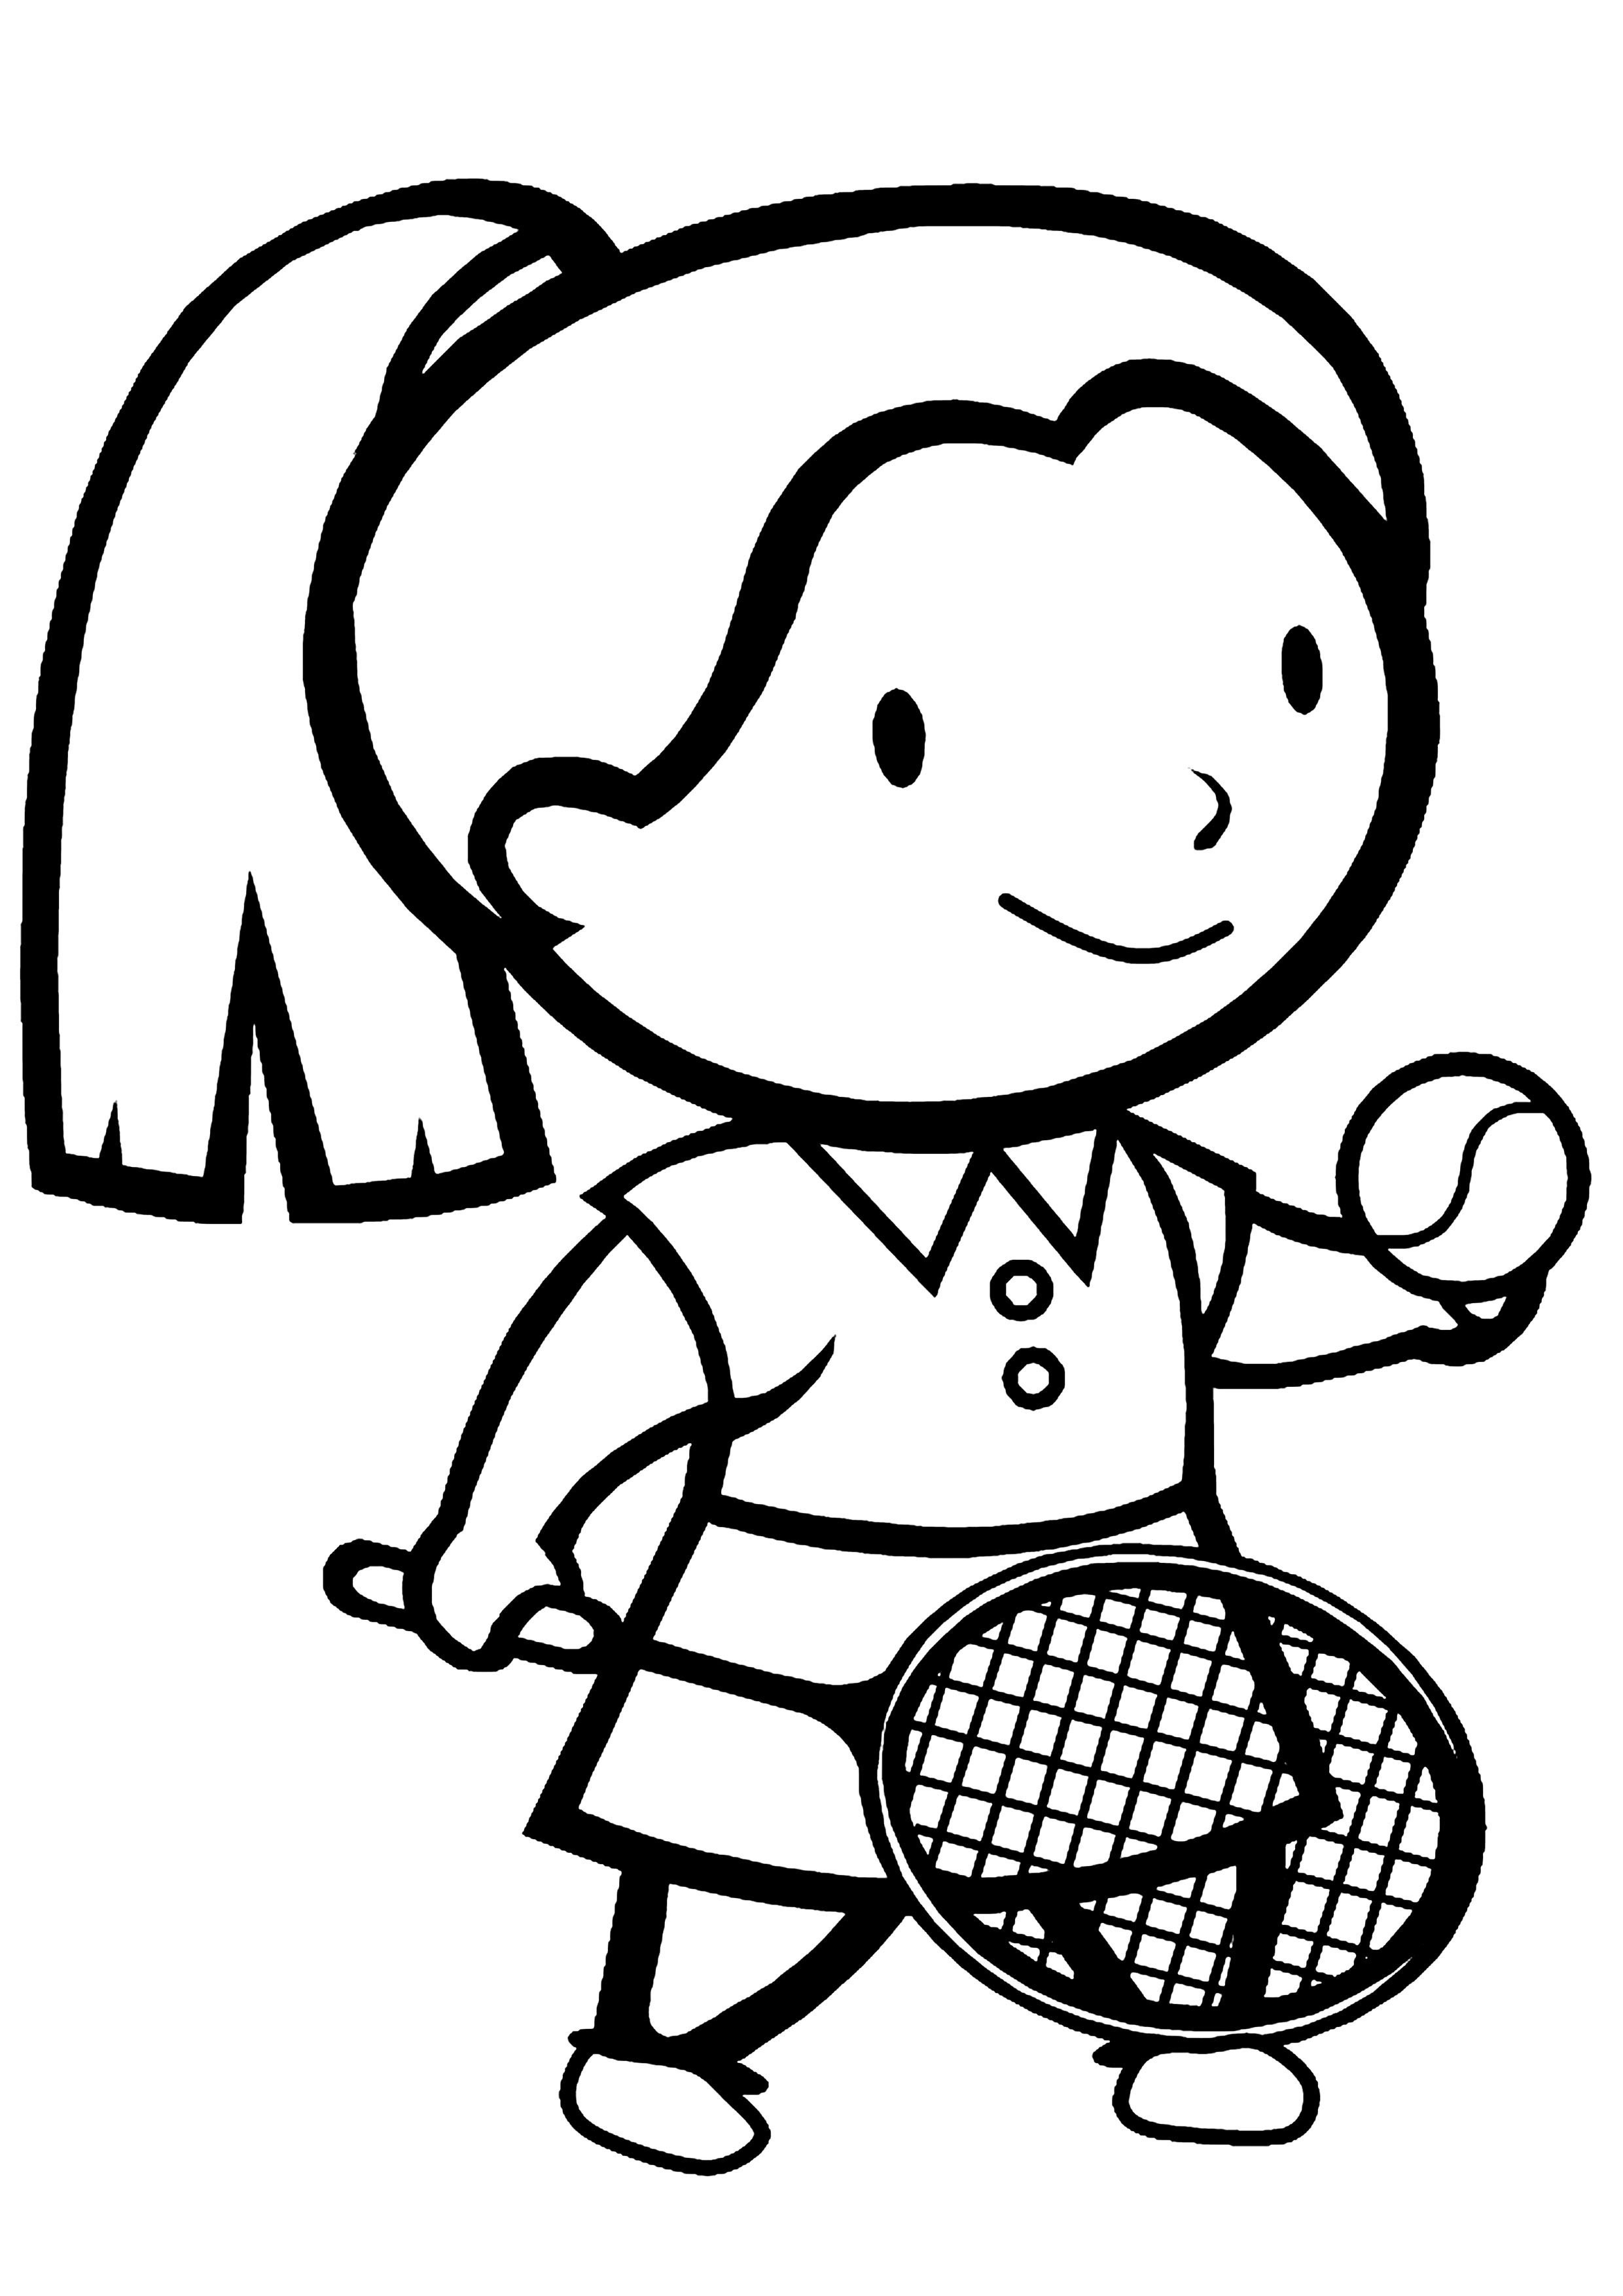 Tennis 01